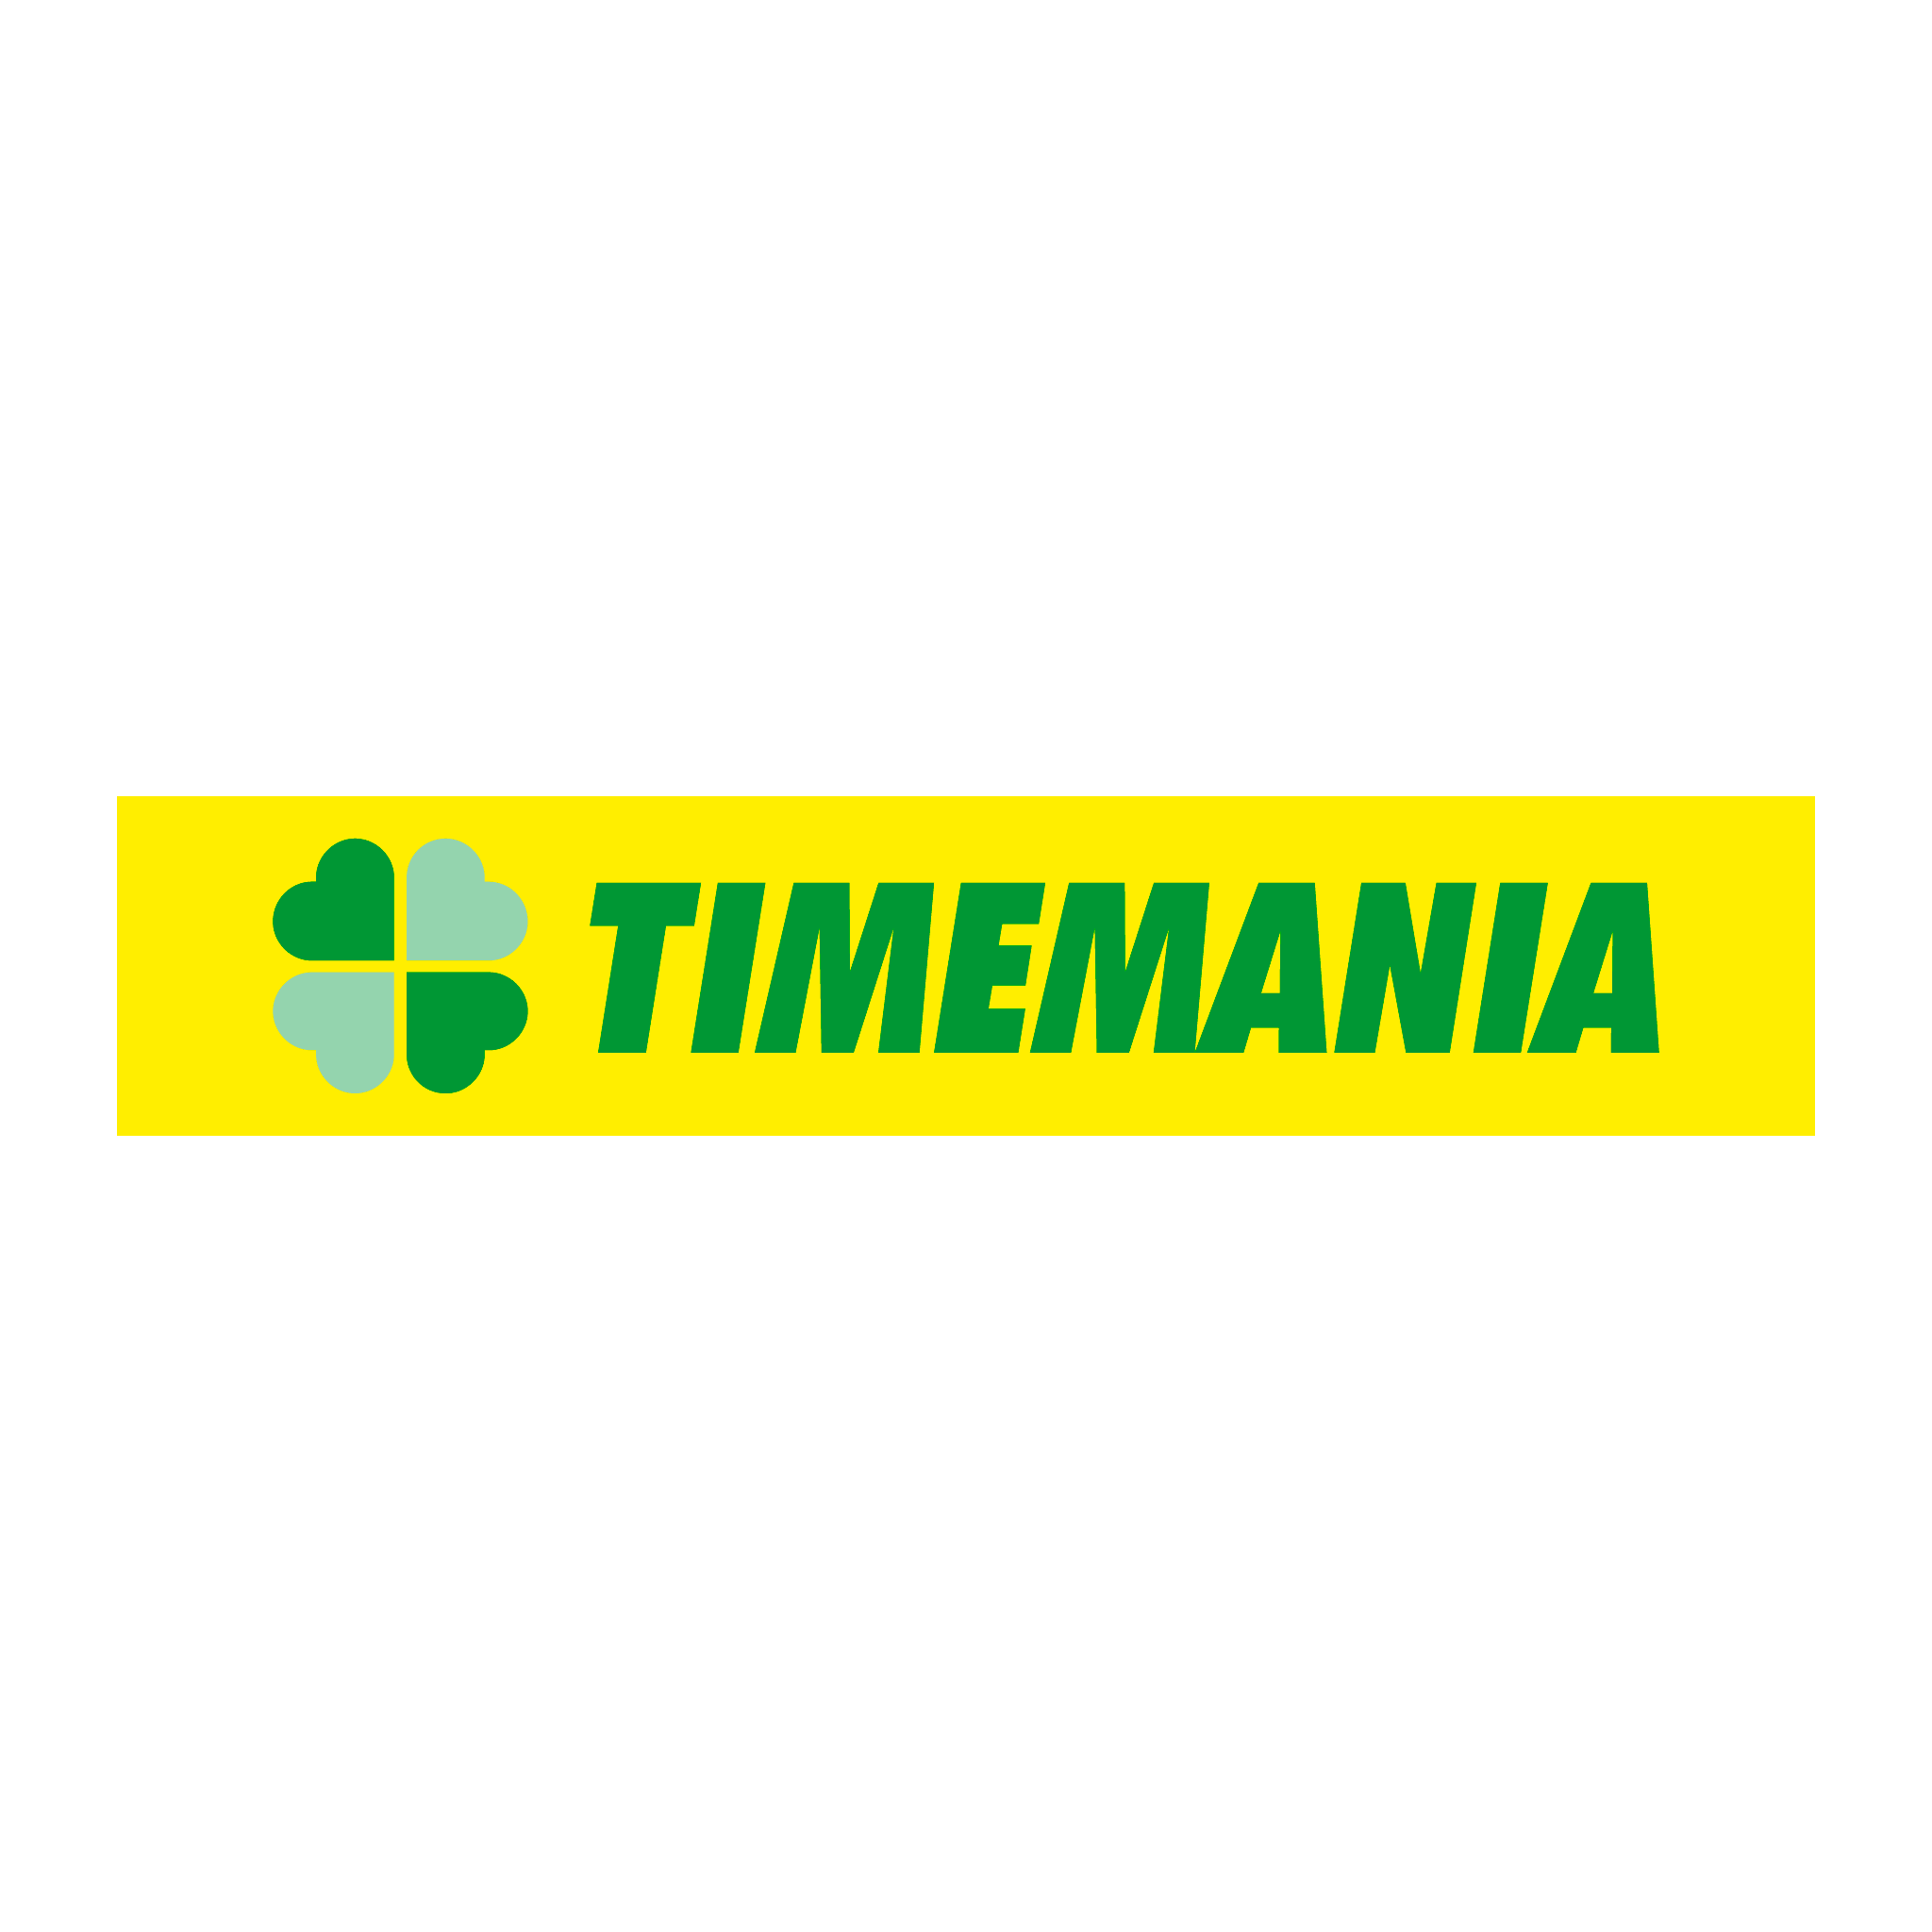 marca timemania